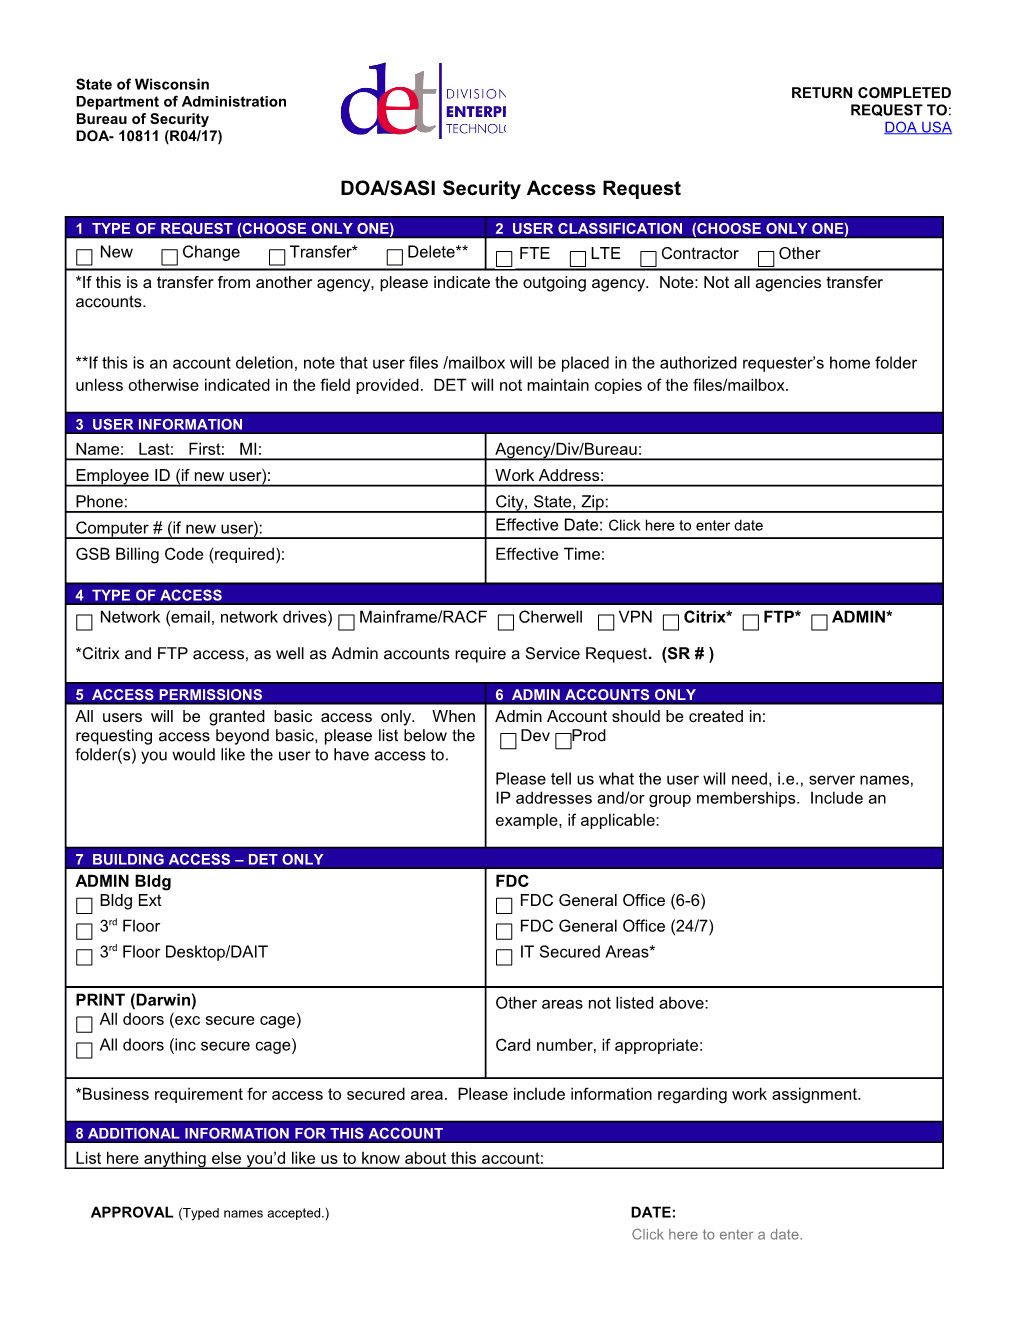 DOA/SASI Security Access Request